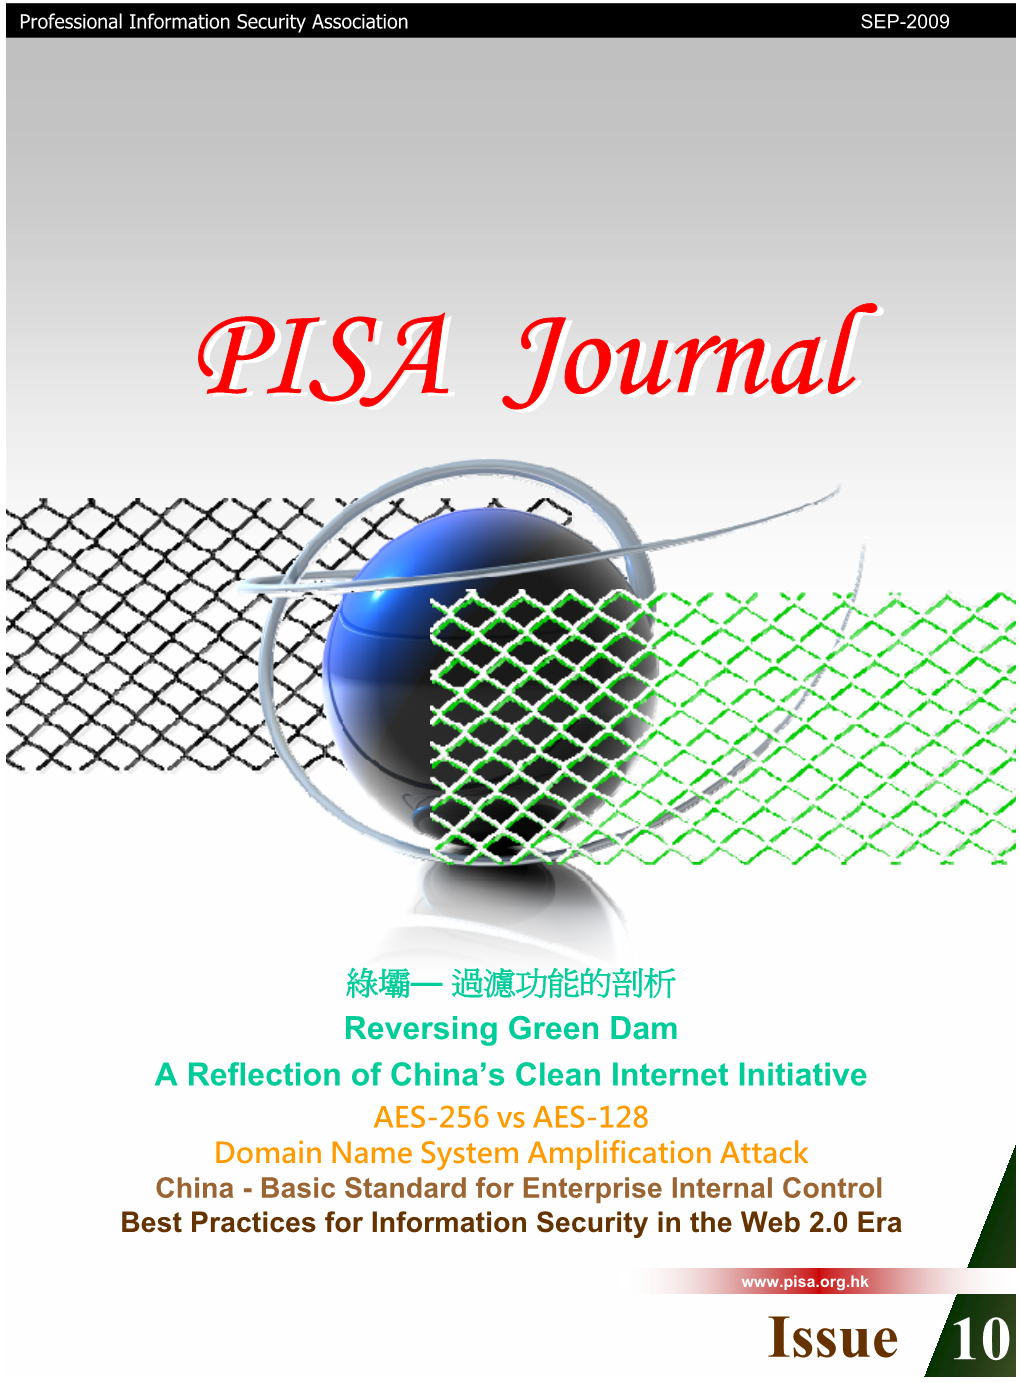 PISA Journal Issue 10